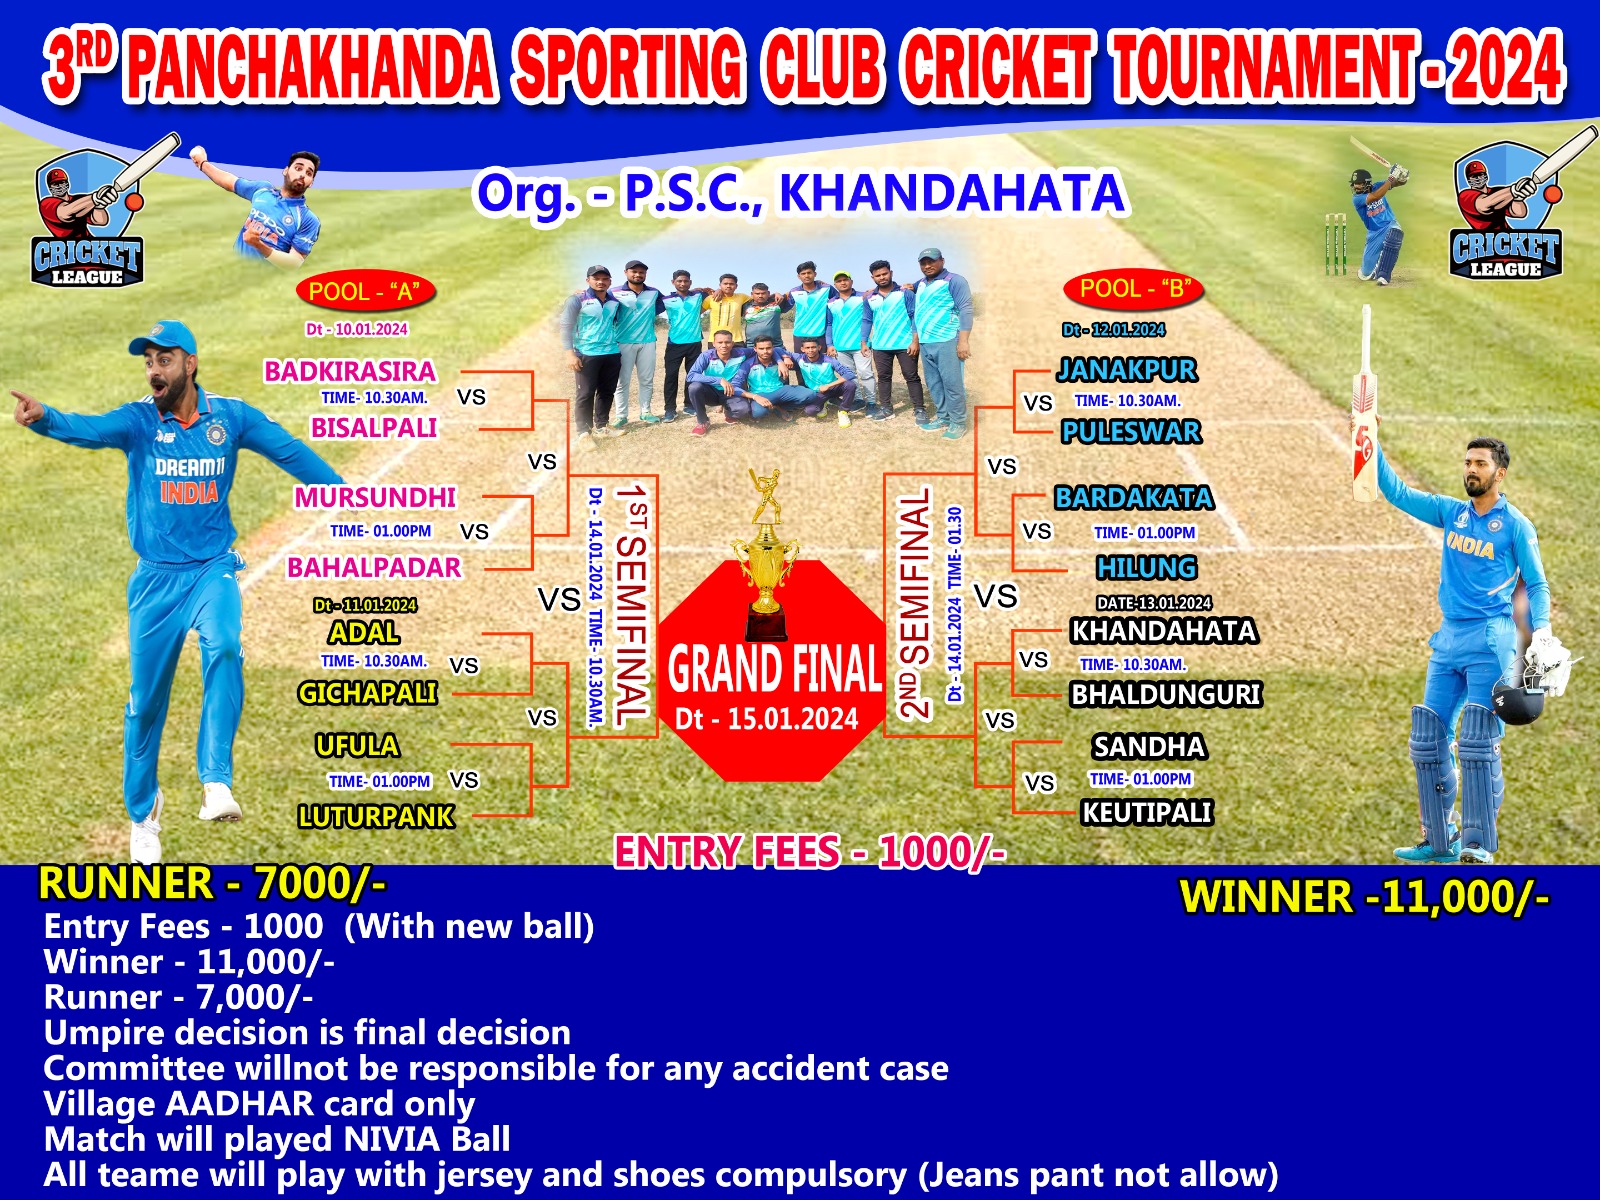 3RD P.S.C. CRICKET TOURNAMENT KHANDAHATA